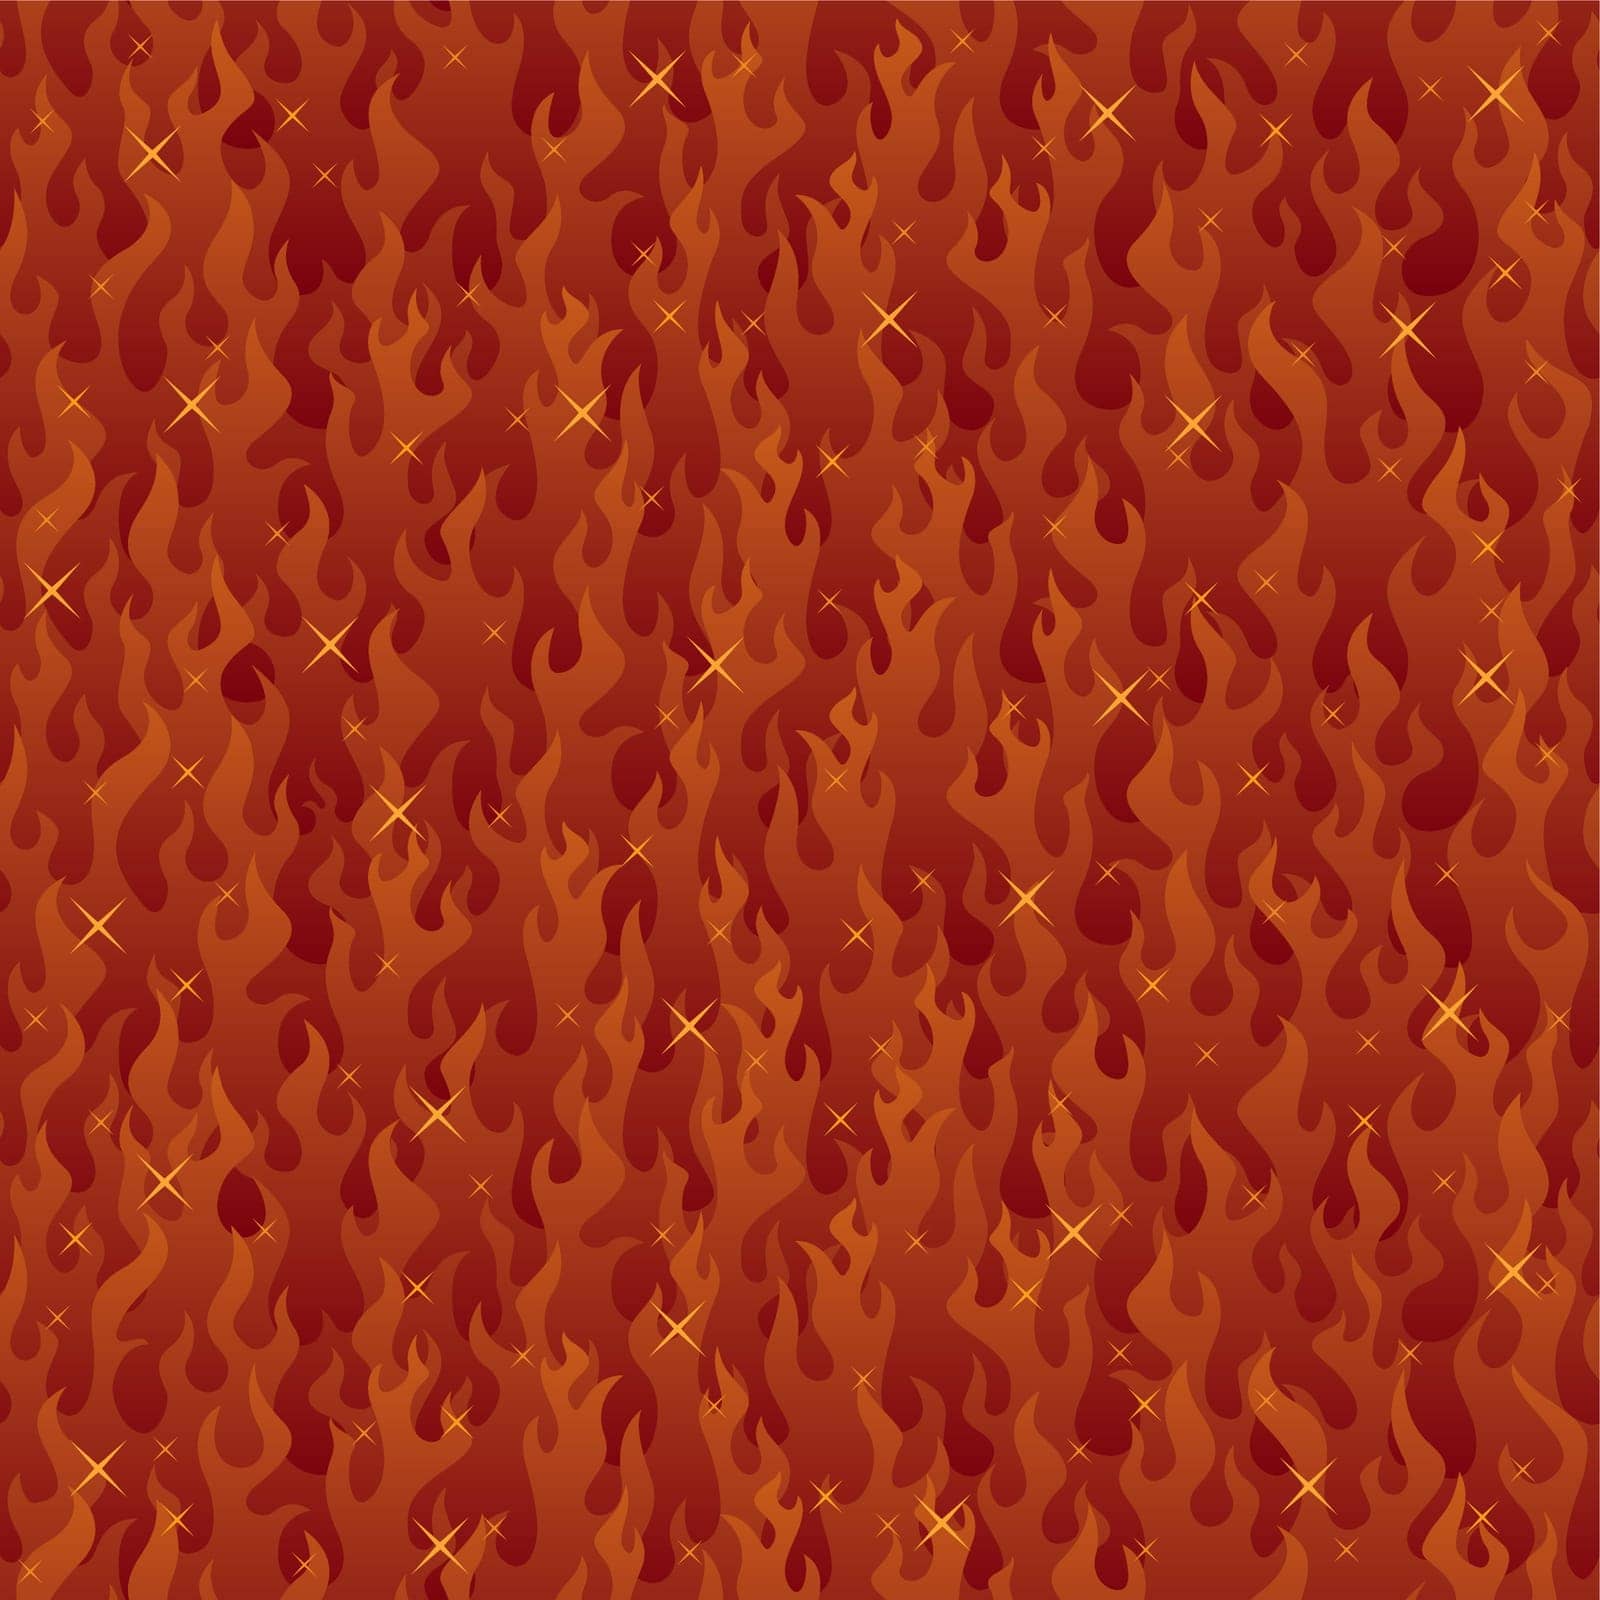 Fire Background Seamless by Malchev